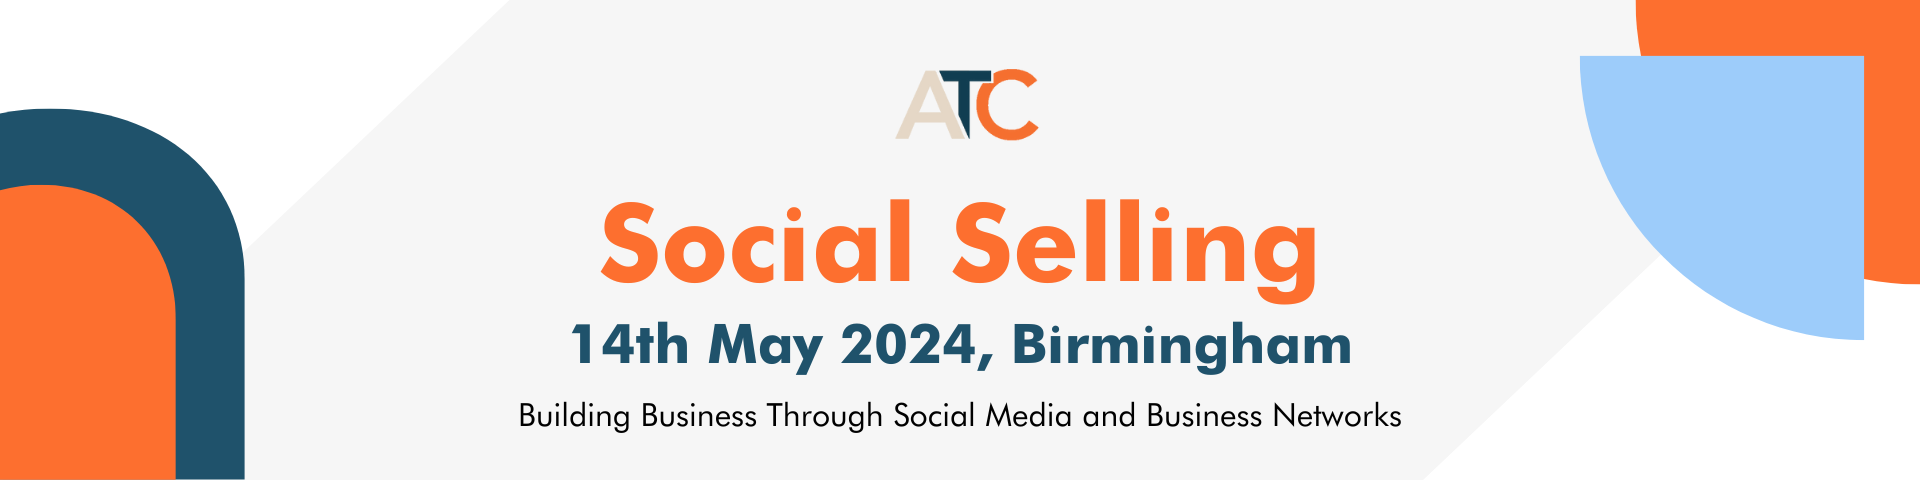 Social Selling Event Takeaways 2024